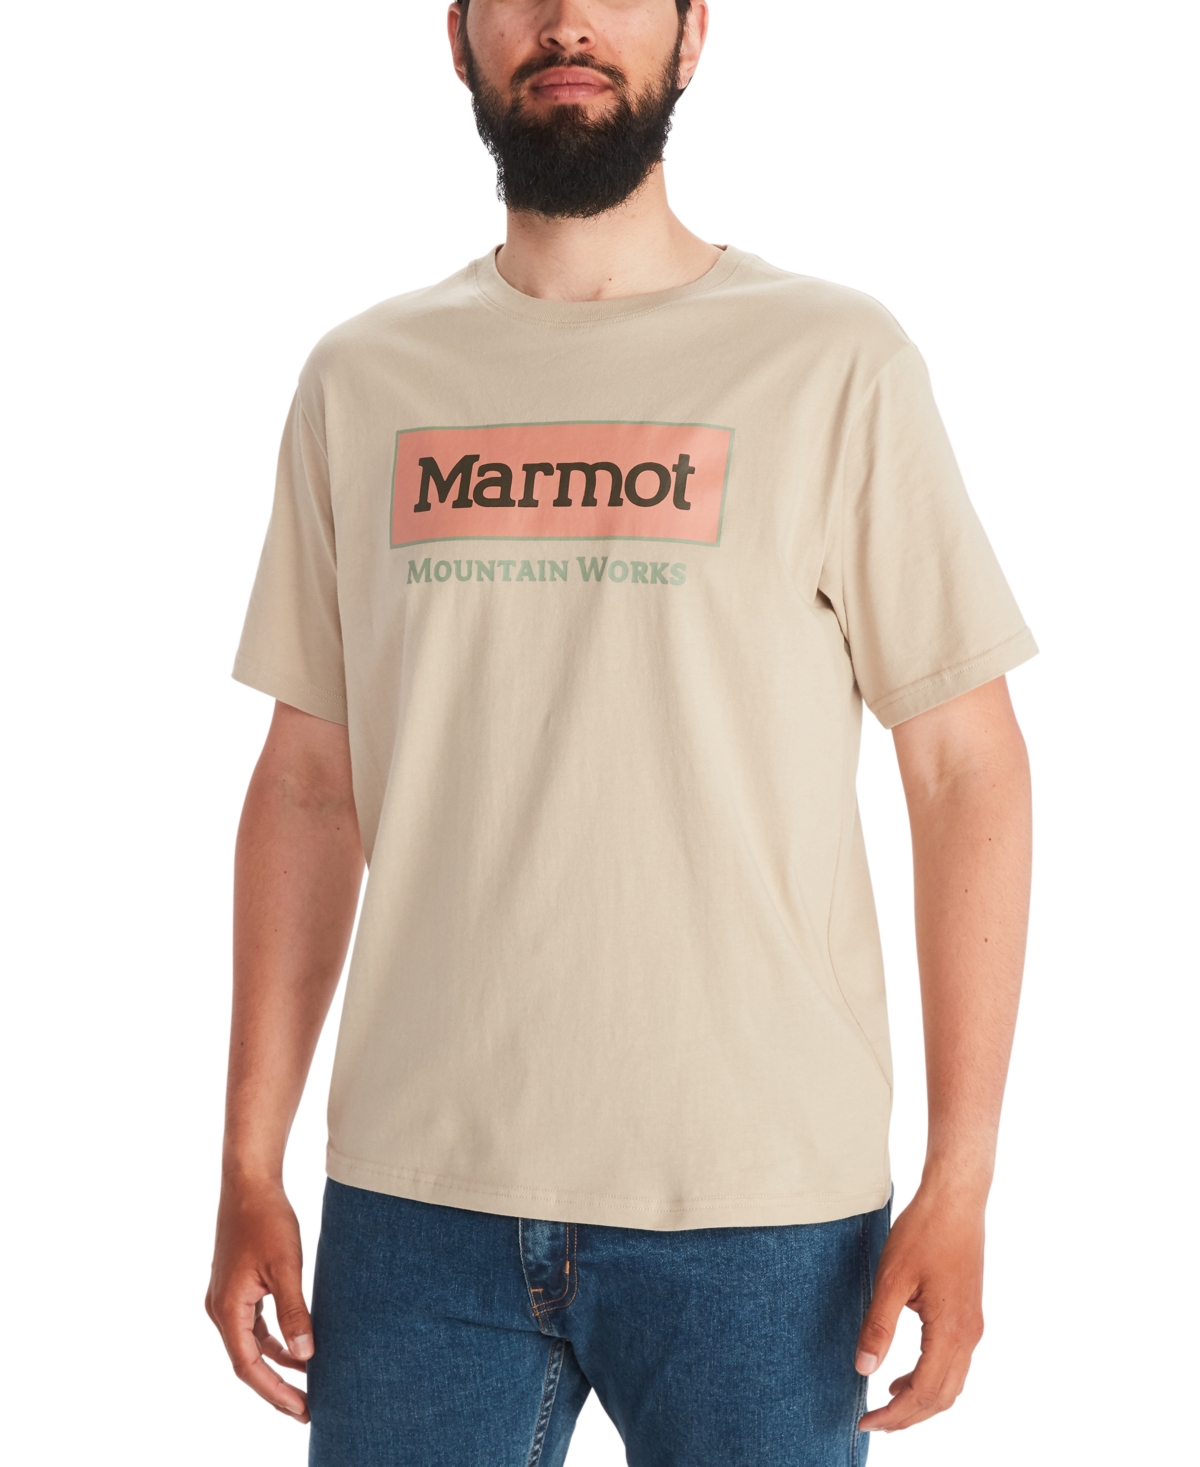 Marmot Men's Mountain Works Tee